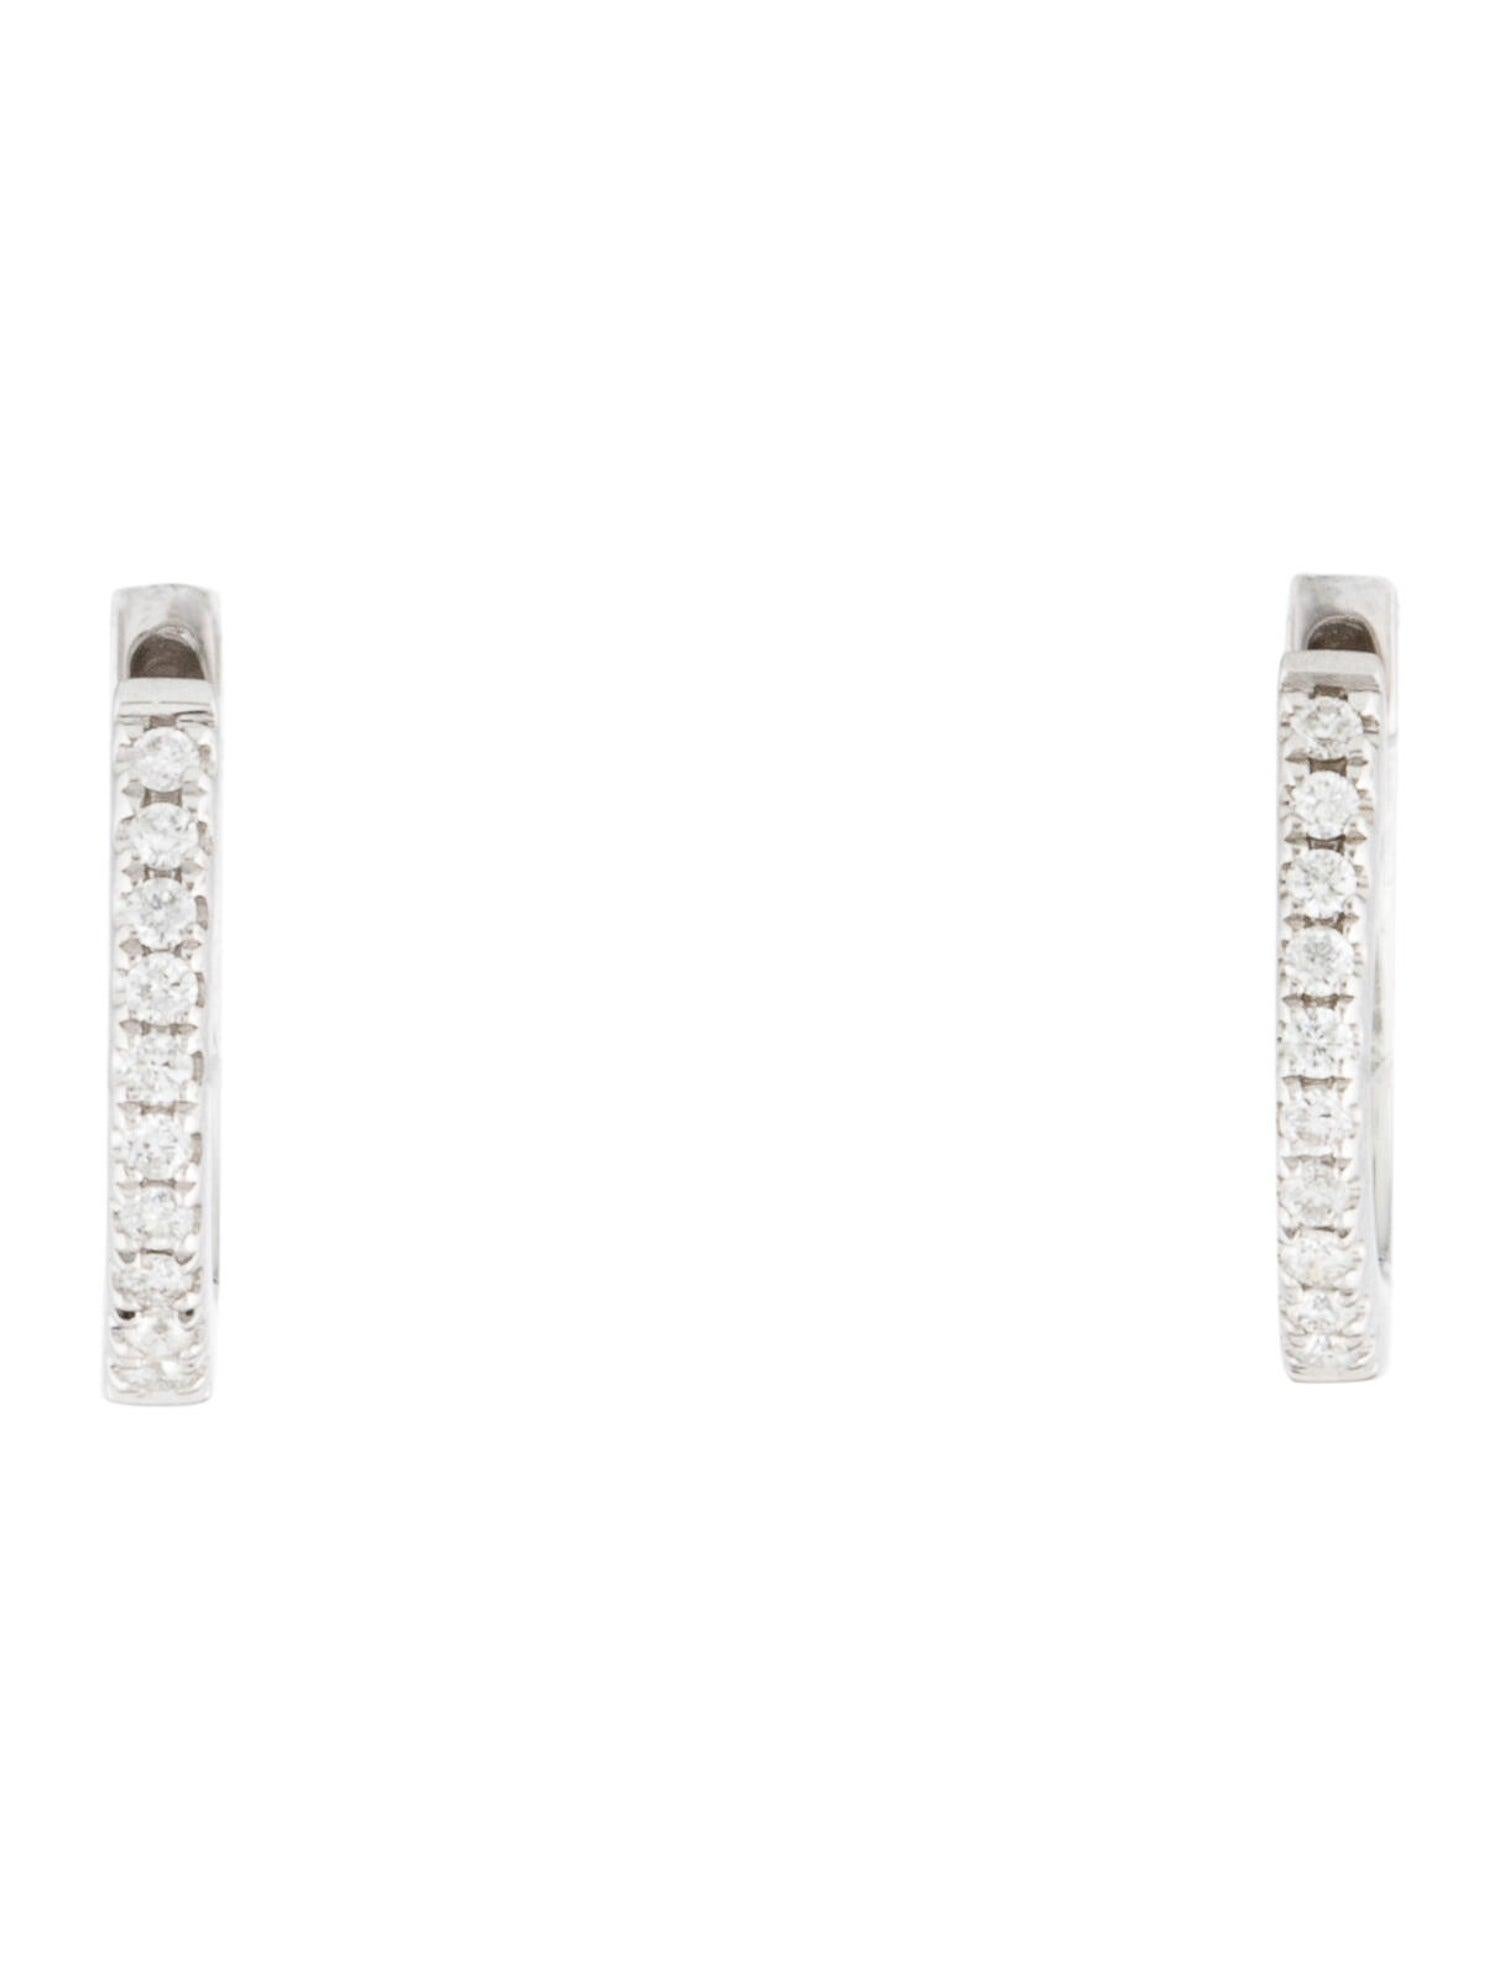 Contemporary 14 Karat White Gold 0.06 Carat Diamond Huggie Hoop Earrings For Sale